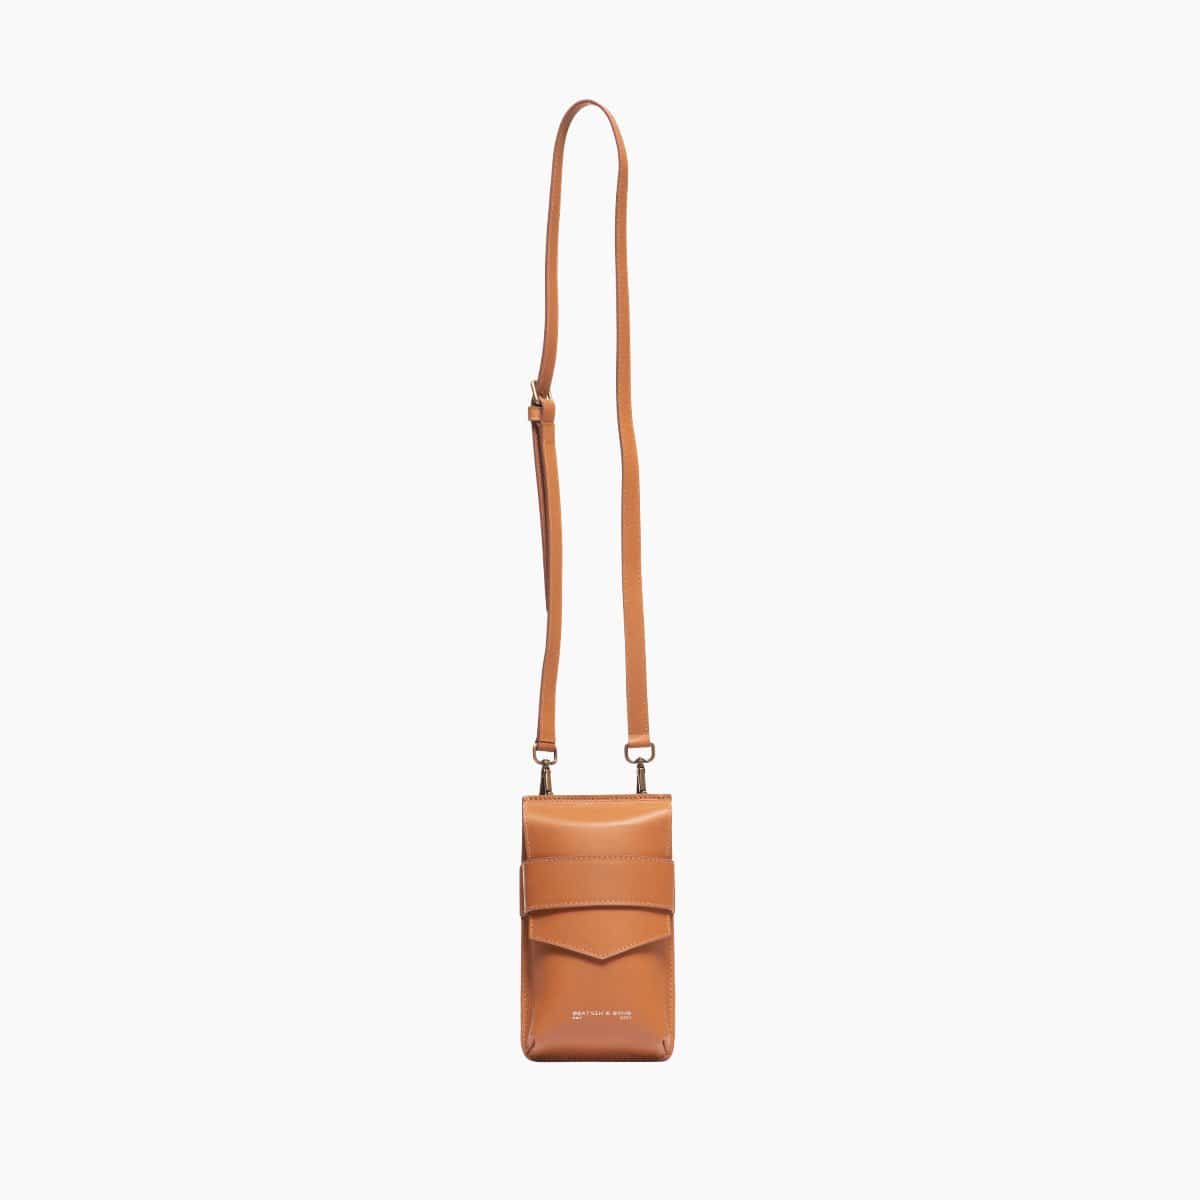 Beatnik & Sons Leather handbags the Kerouac bag